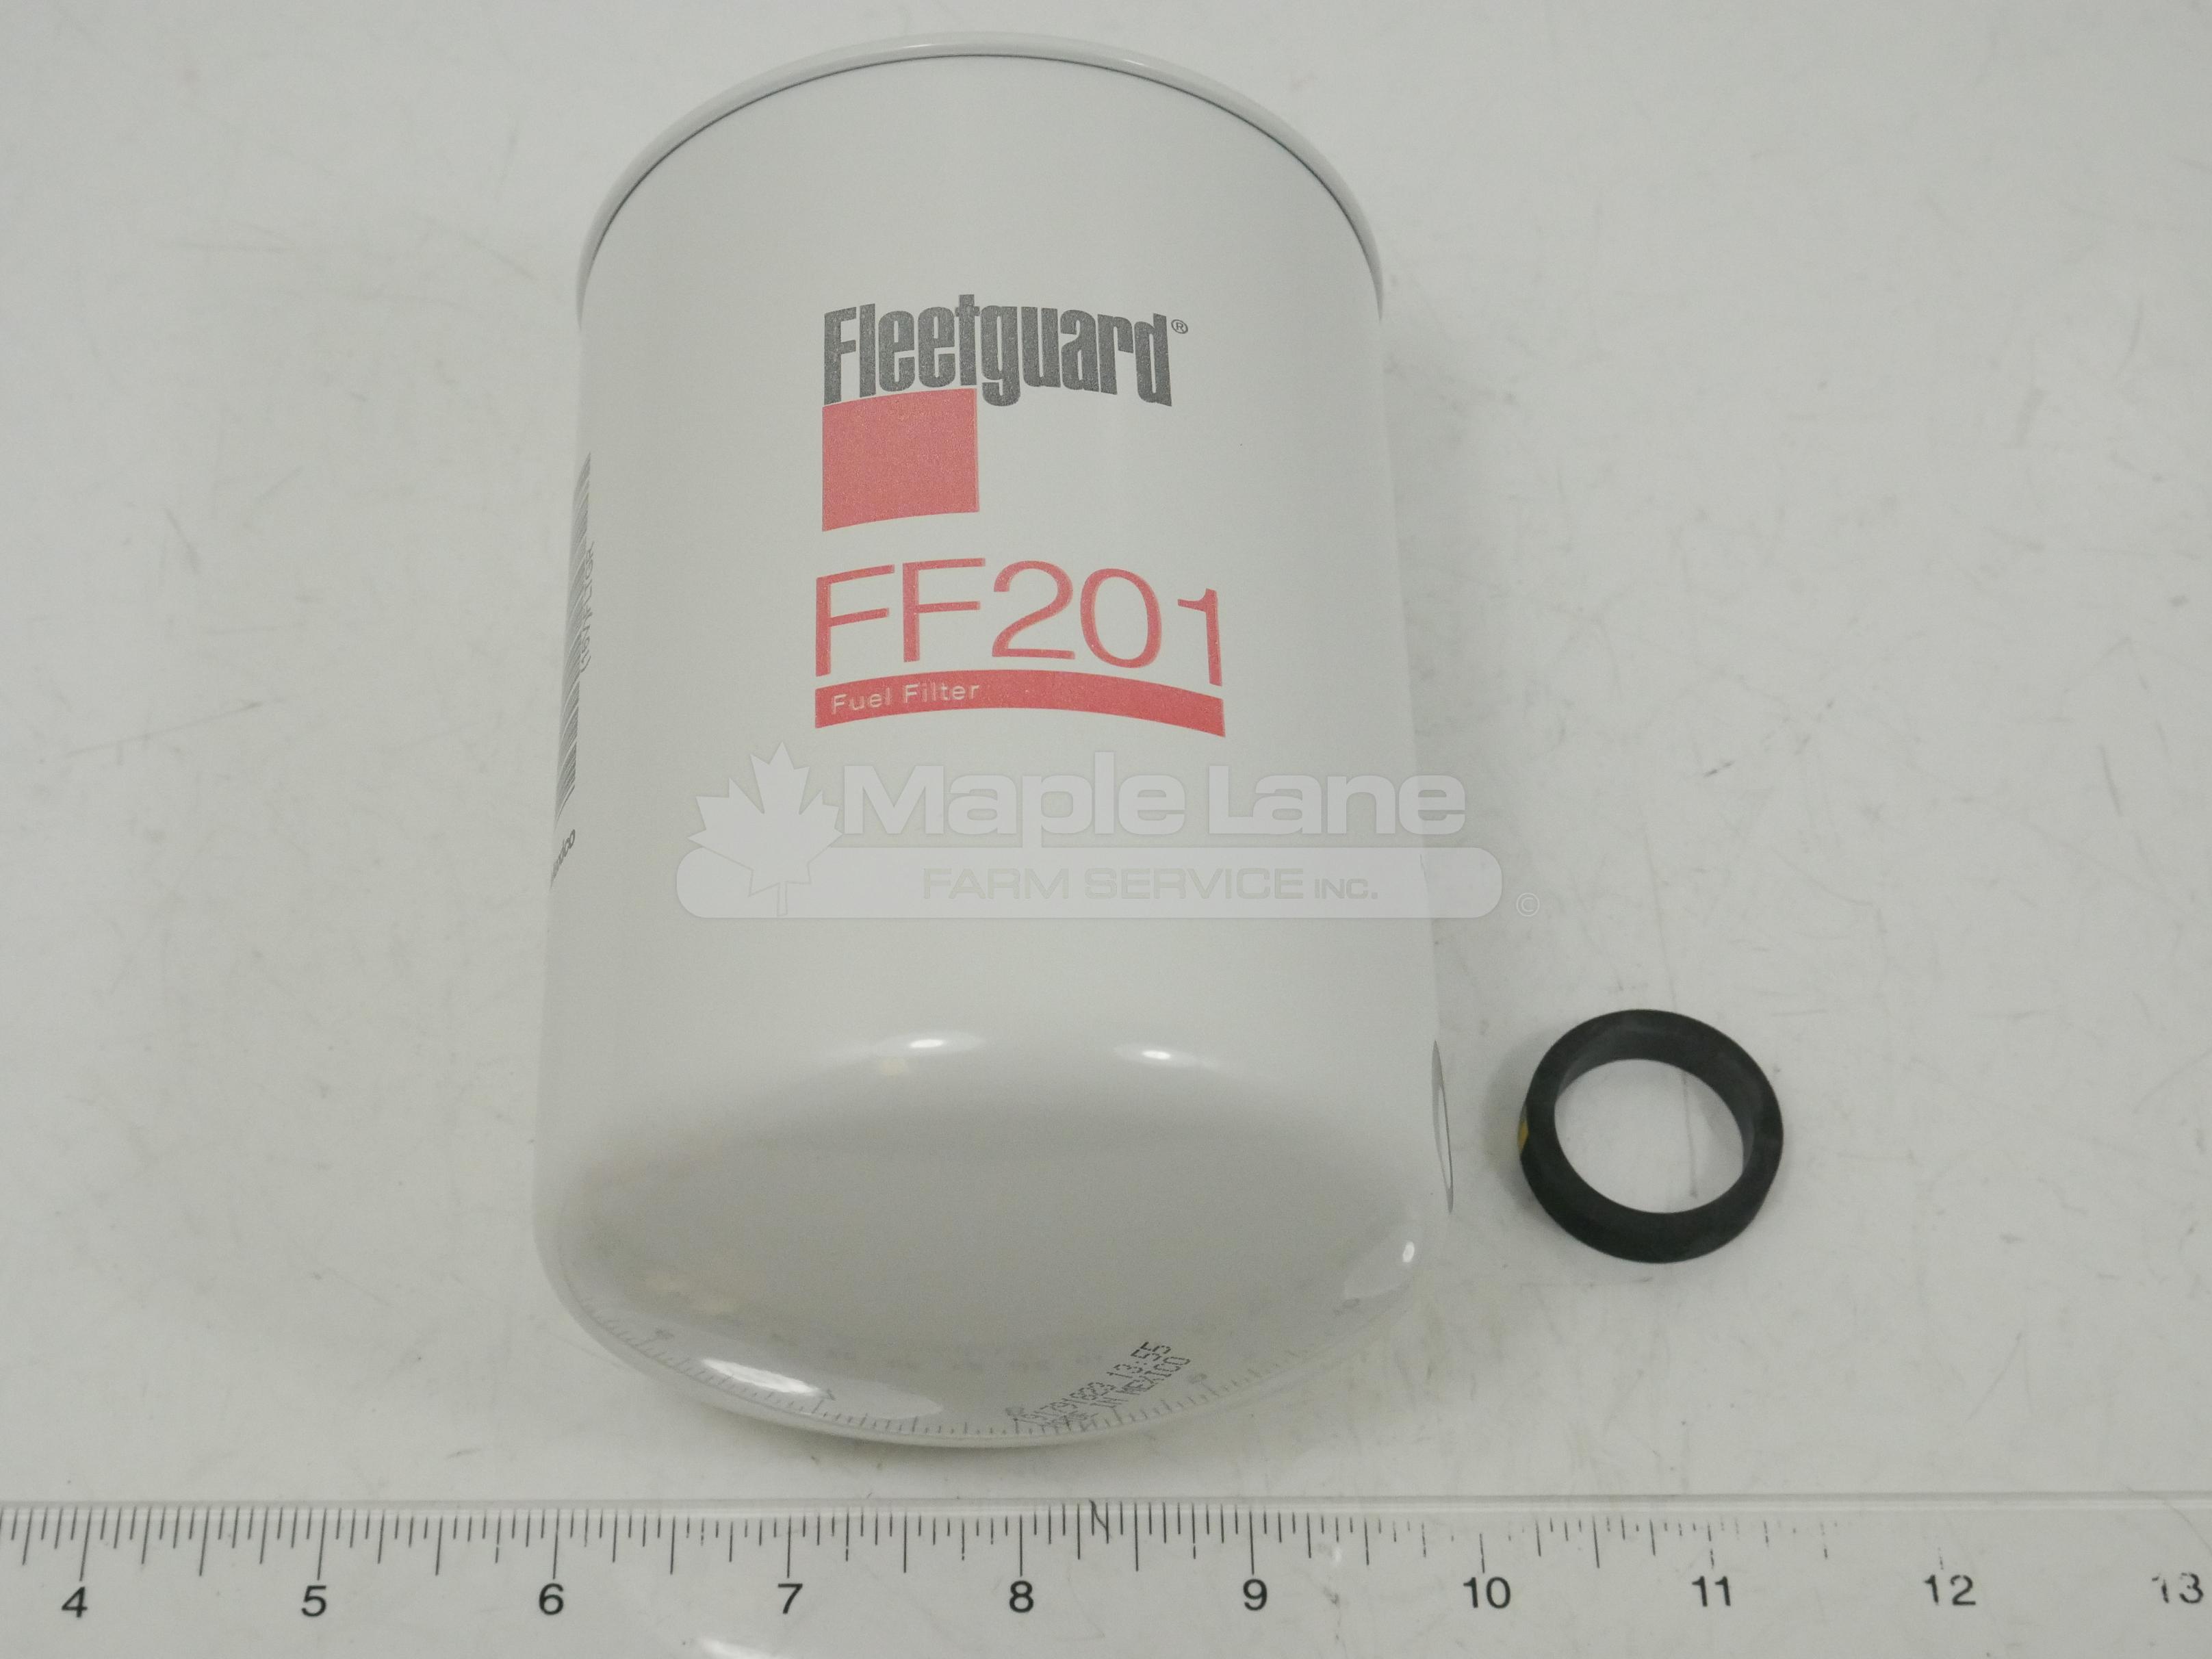 FF201 Fuel Filter